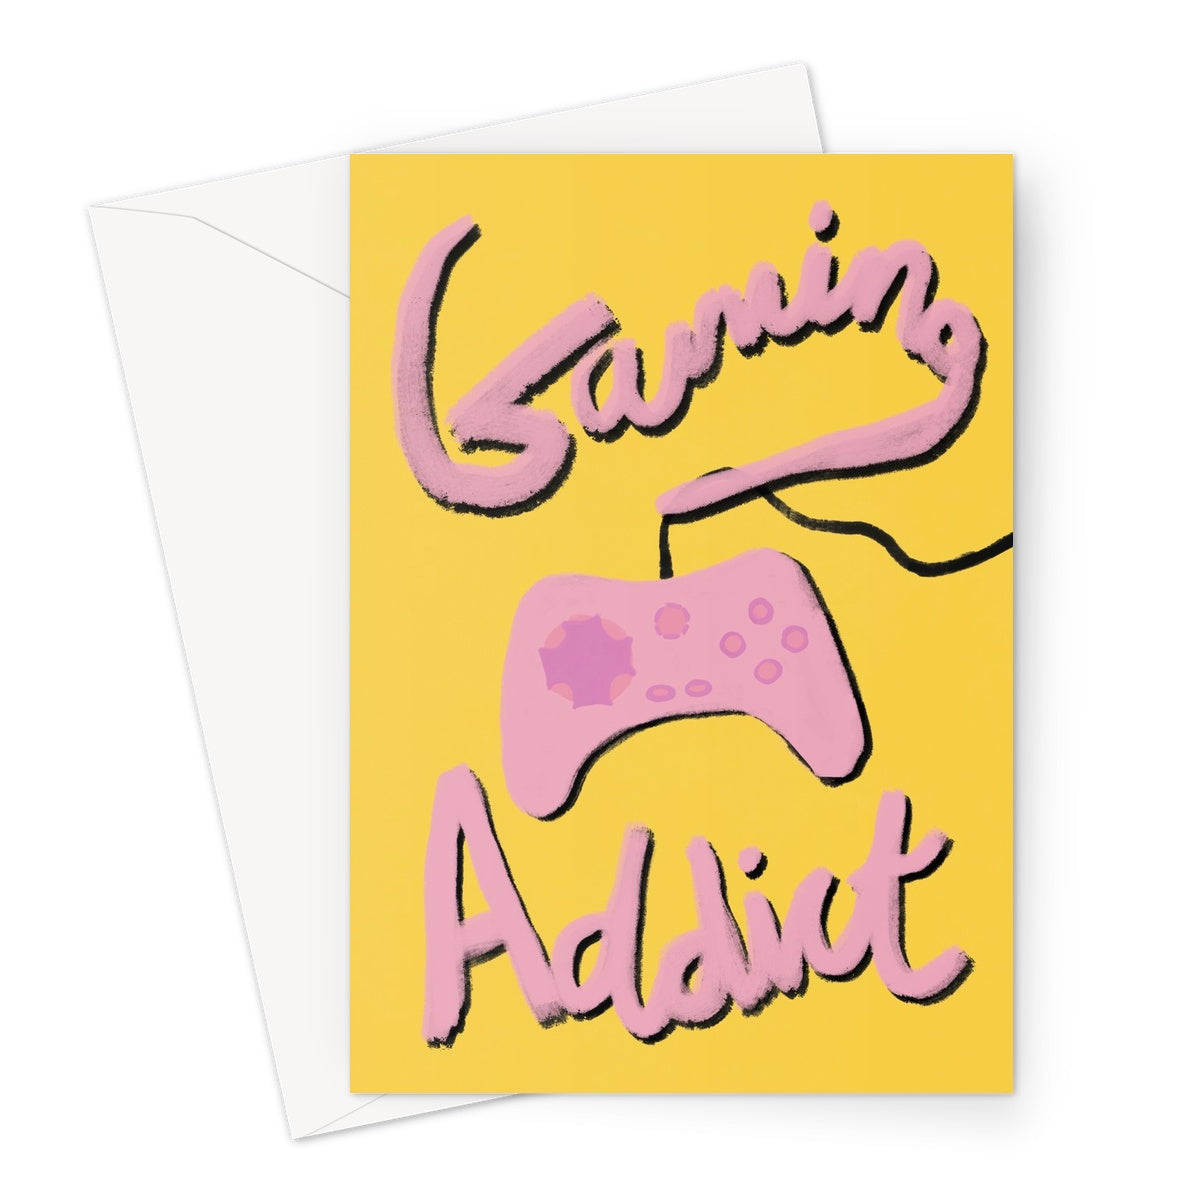 Gaming Addict Print - Yellow, Pink Greeting Card